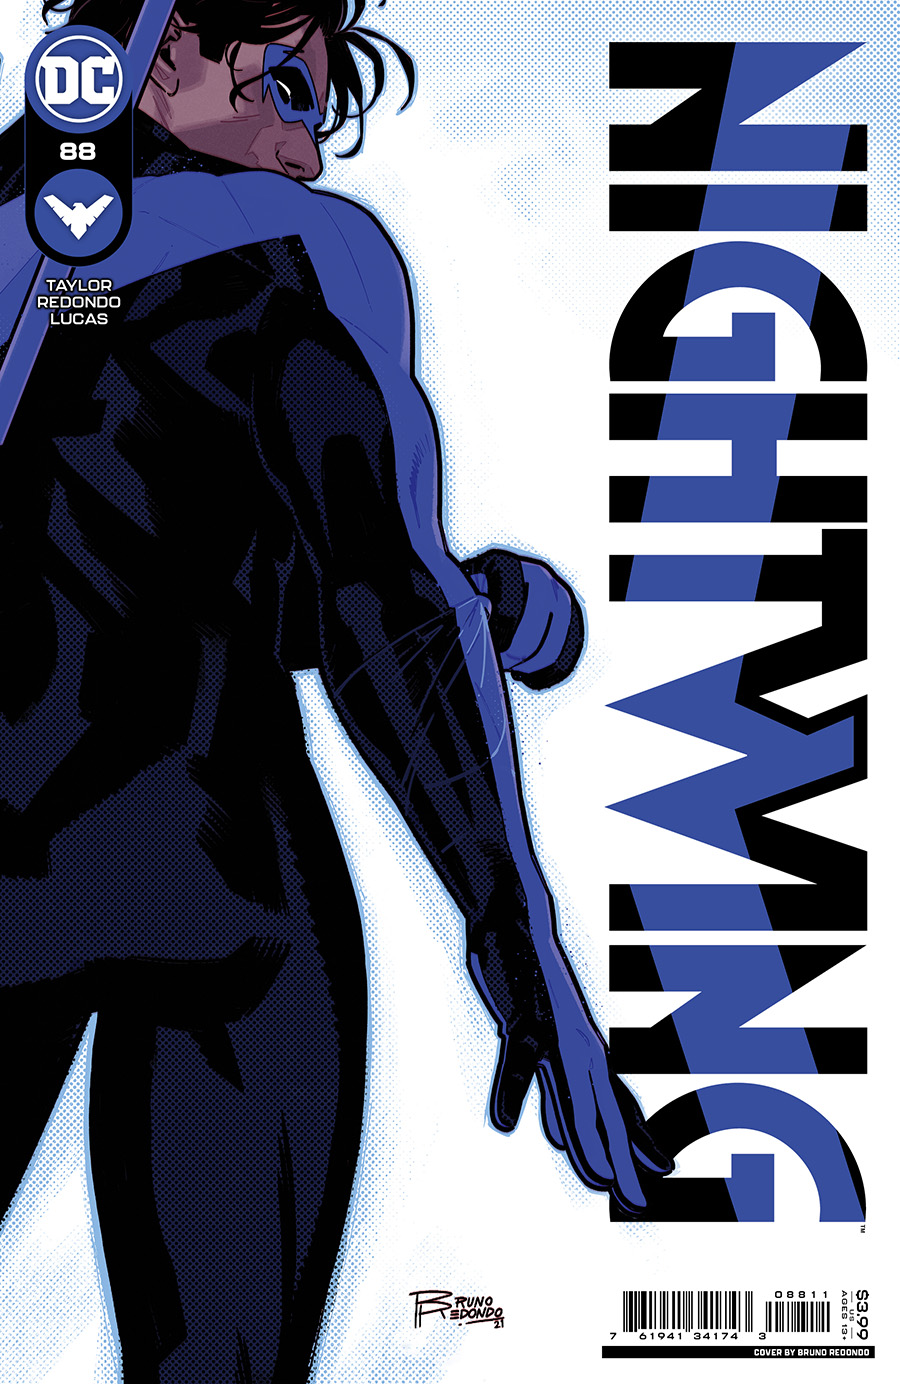 Nightwing Vol 4 #88 Cover A Regular Bruno Redondo Cover